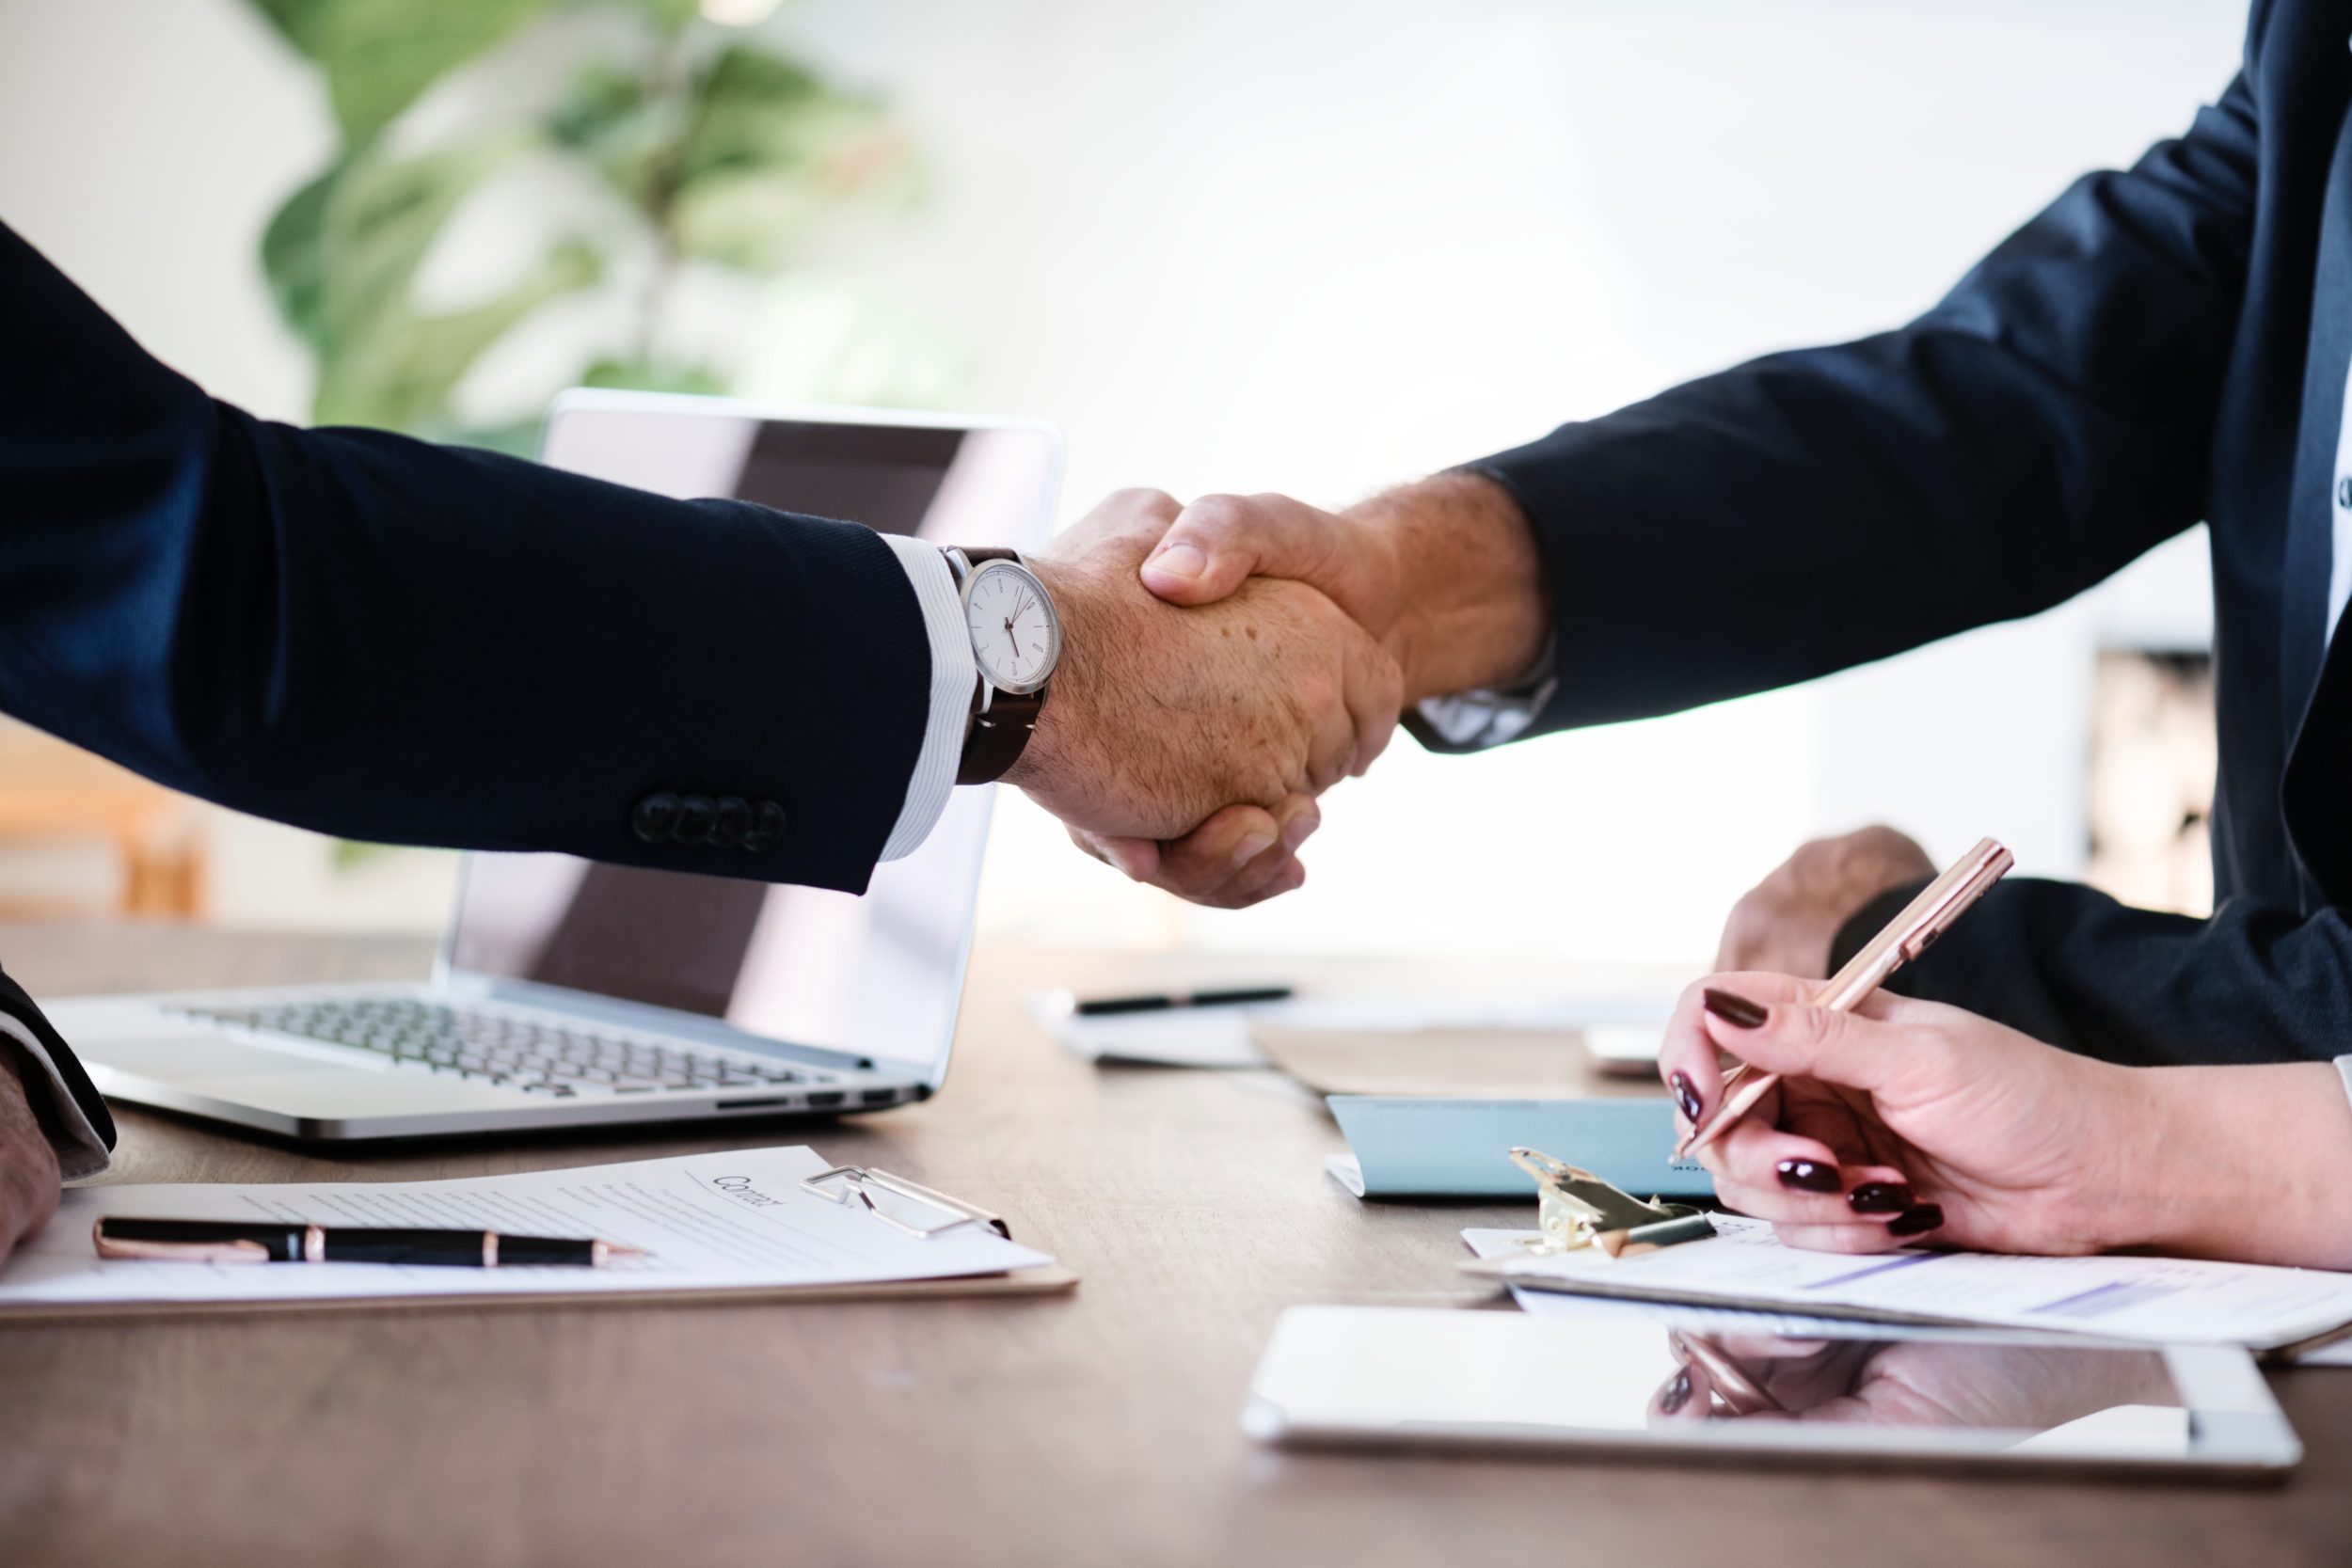 Business handshake in office environment